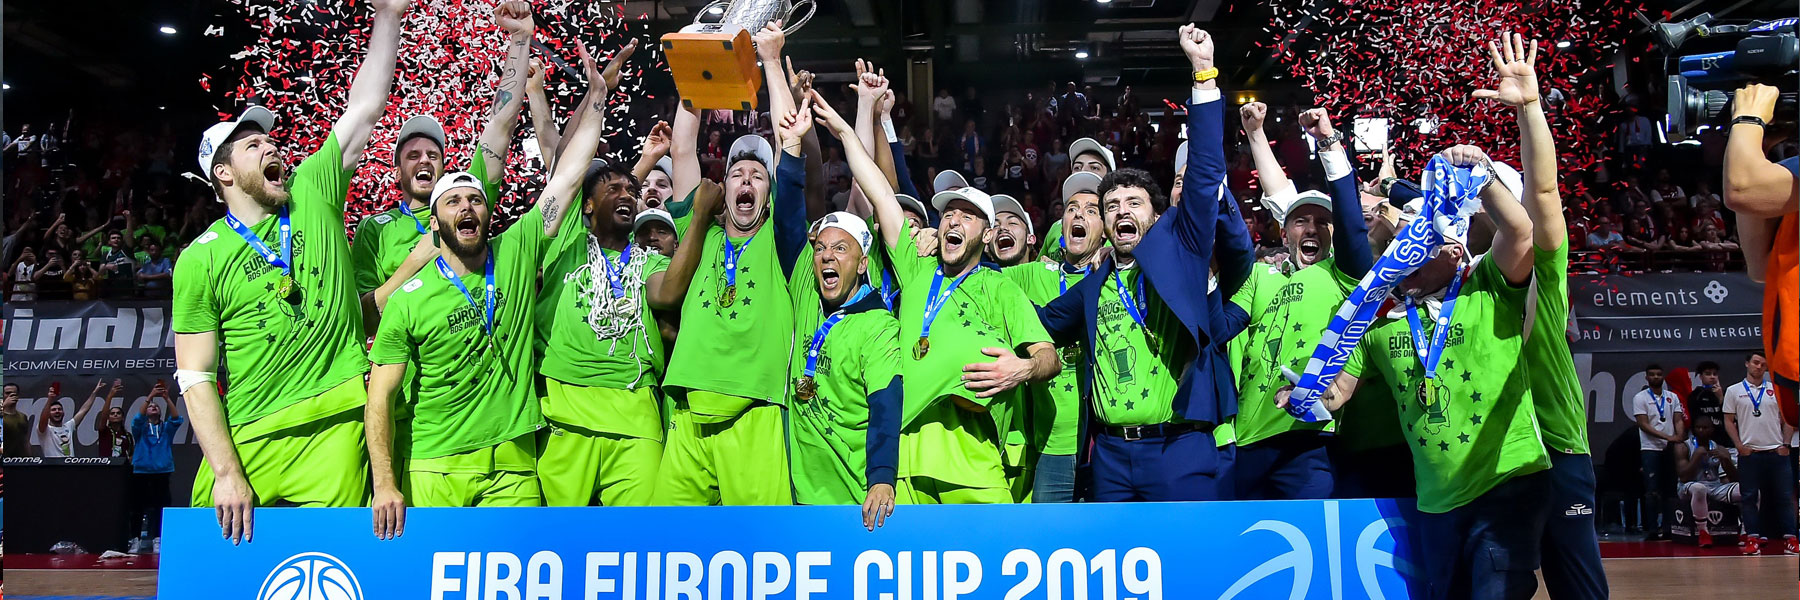 Fiba Europe Cup 2018-19